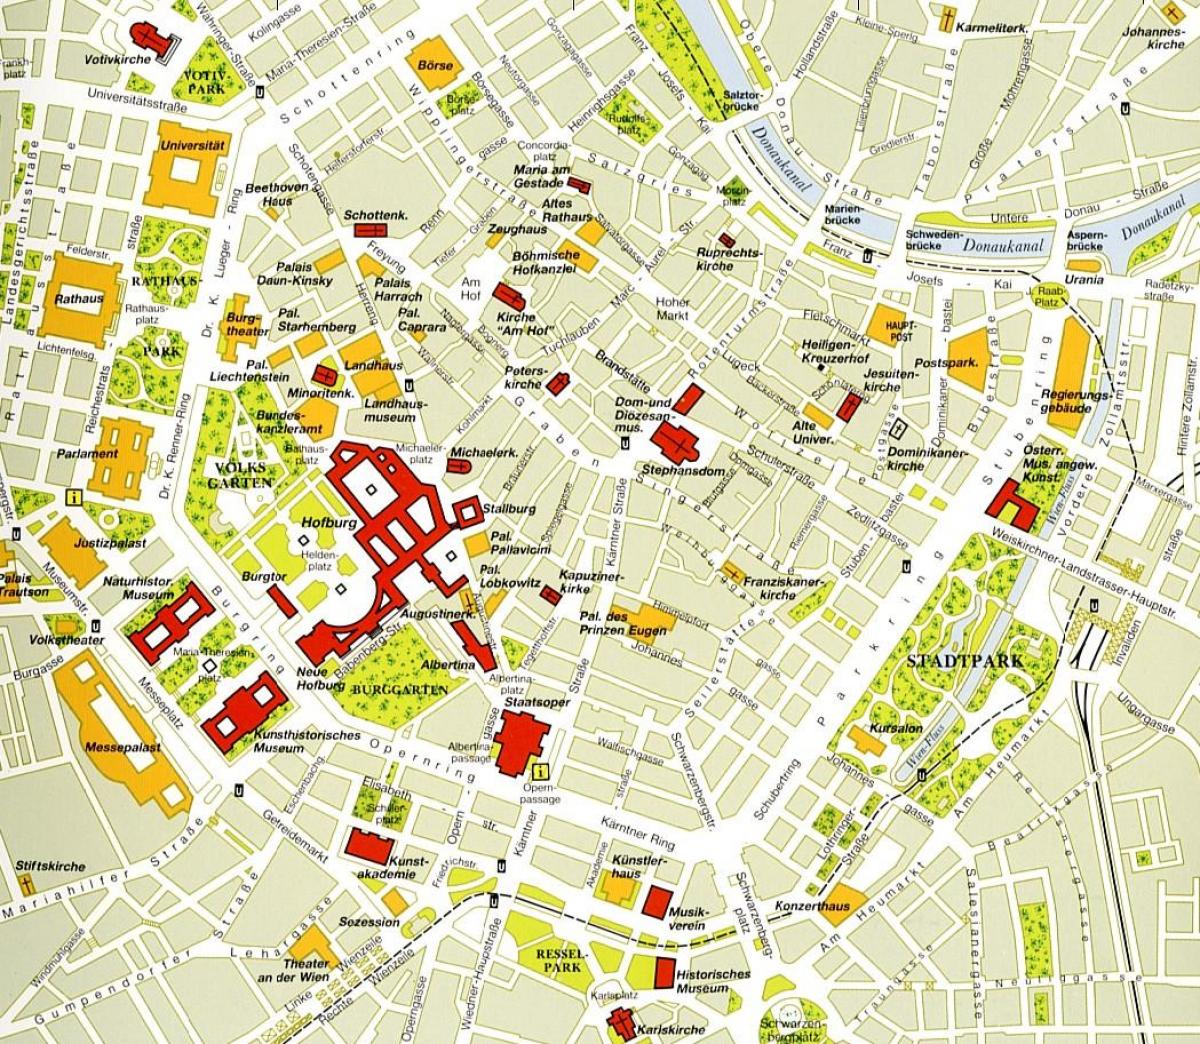 Vienna bản đồ trung tâm